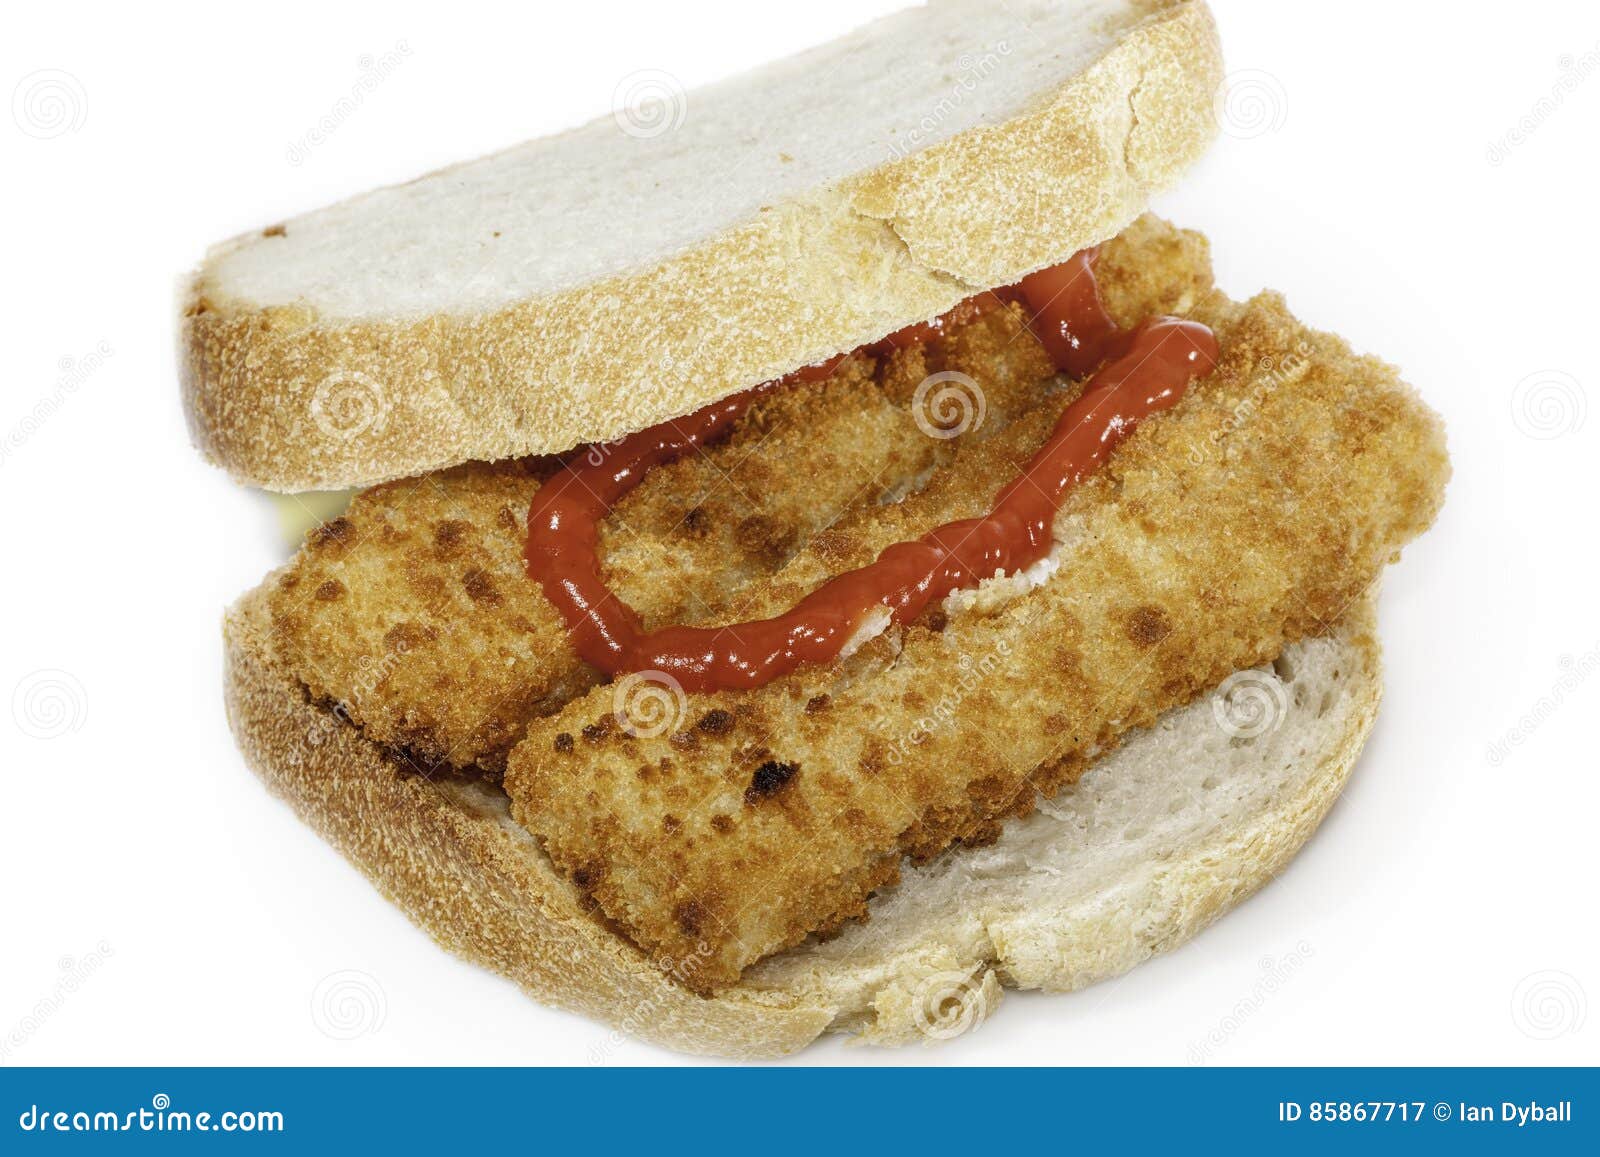 fish finger sandwich comfort food